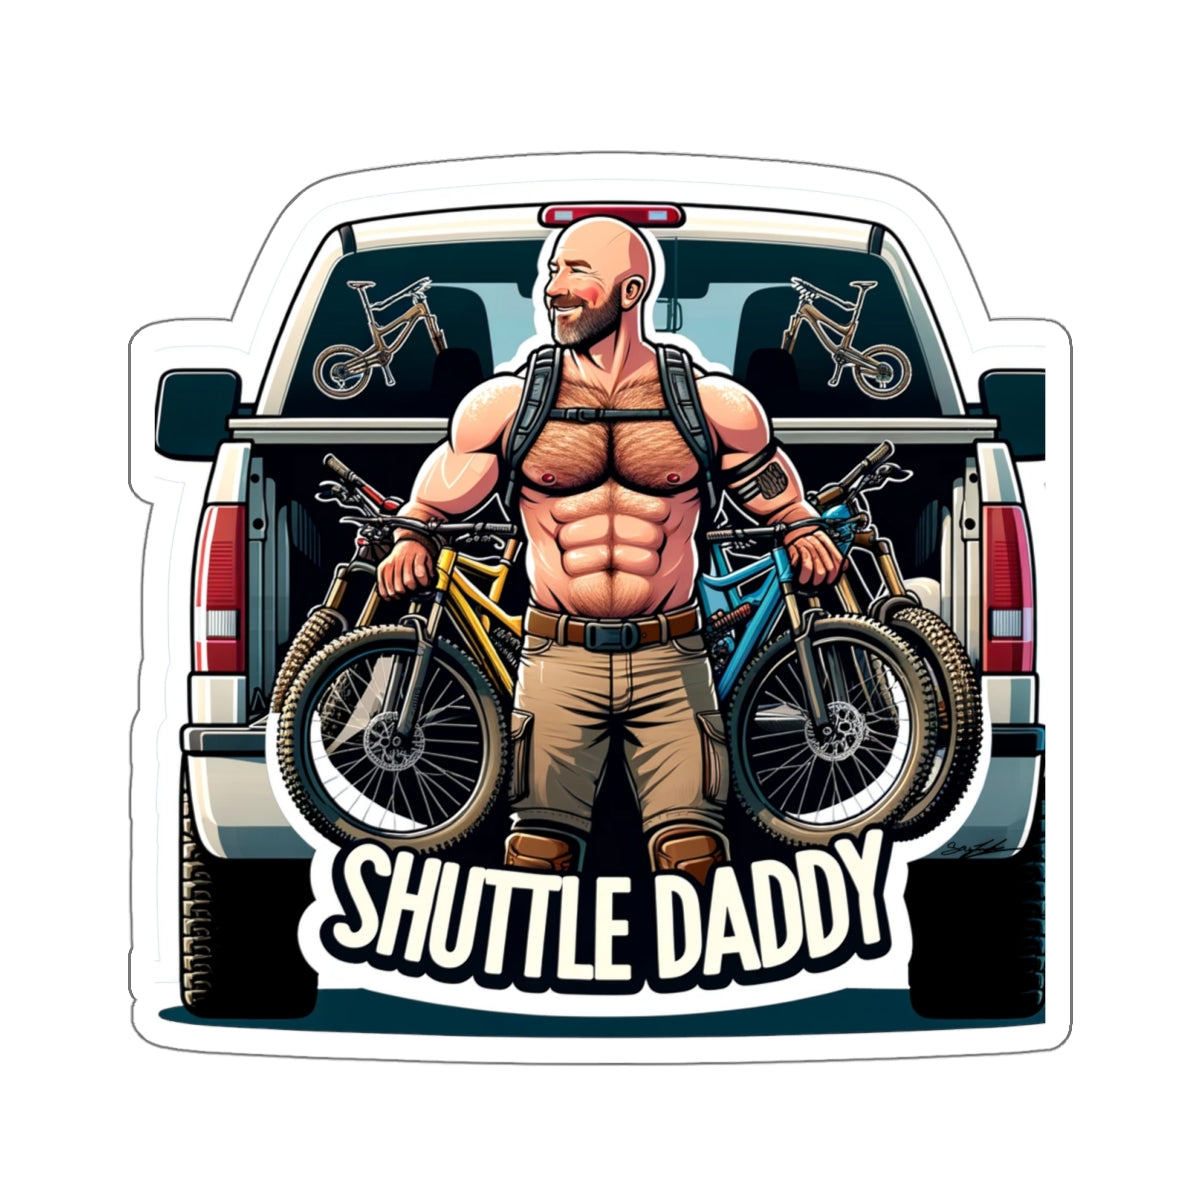 Shuttle Daddy Stickers